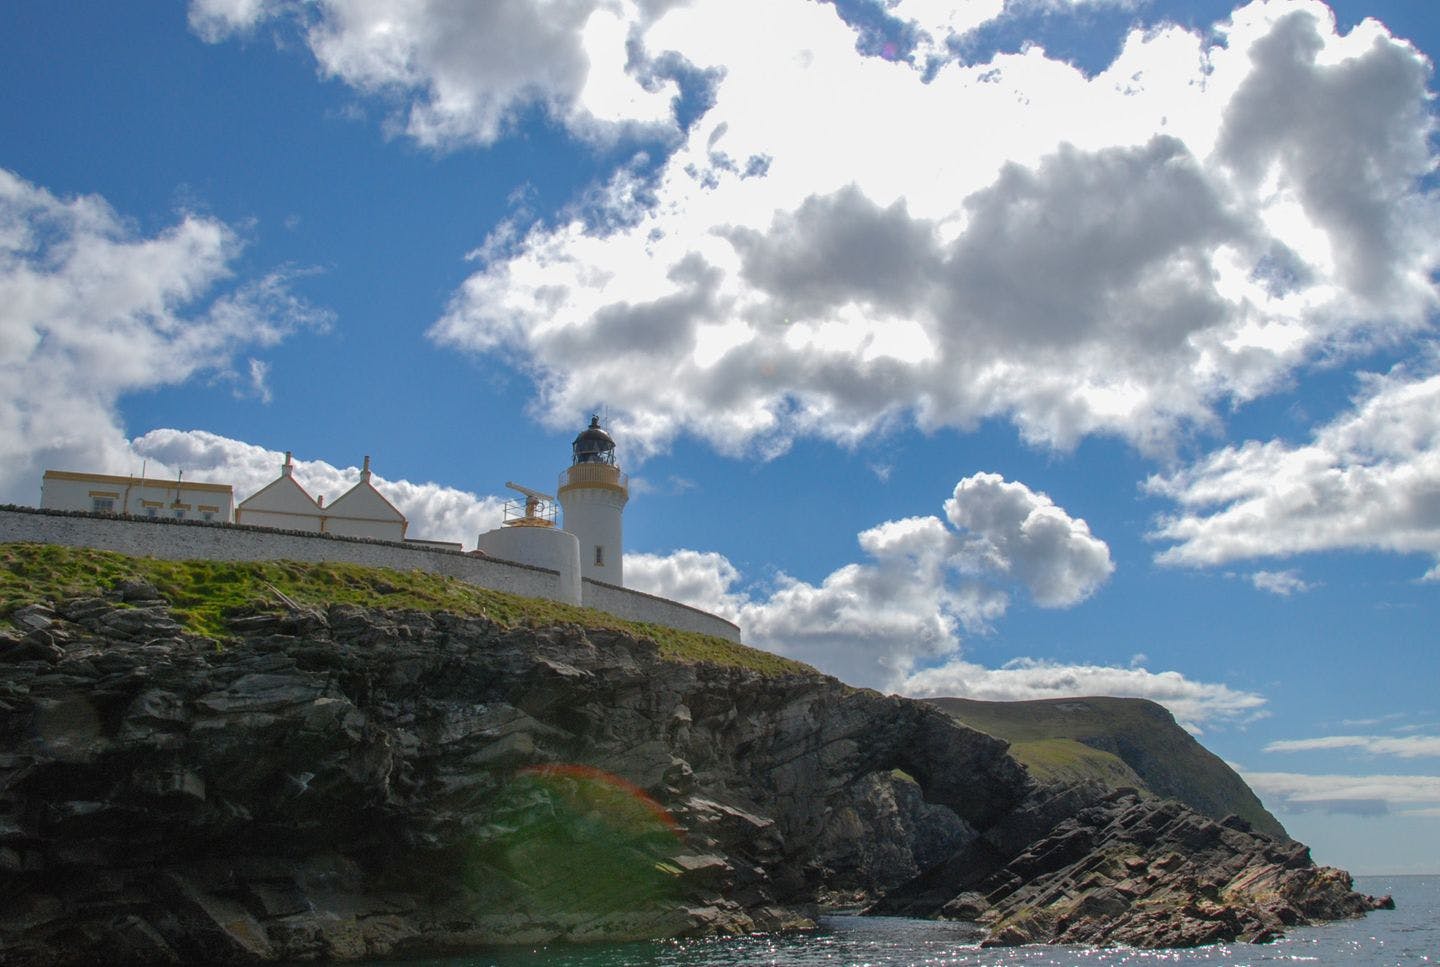 The lighthouse on Bressay, leading into Lerwick on Shetland. Photo: Ronald Toppe